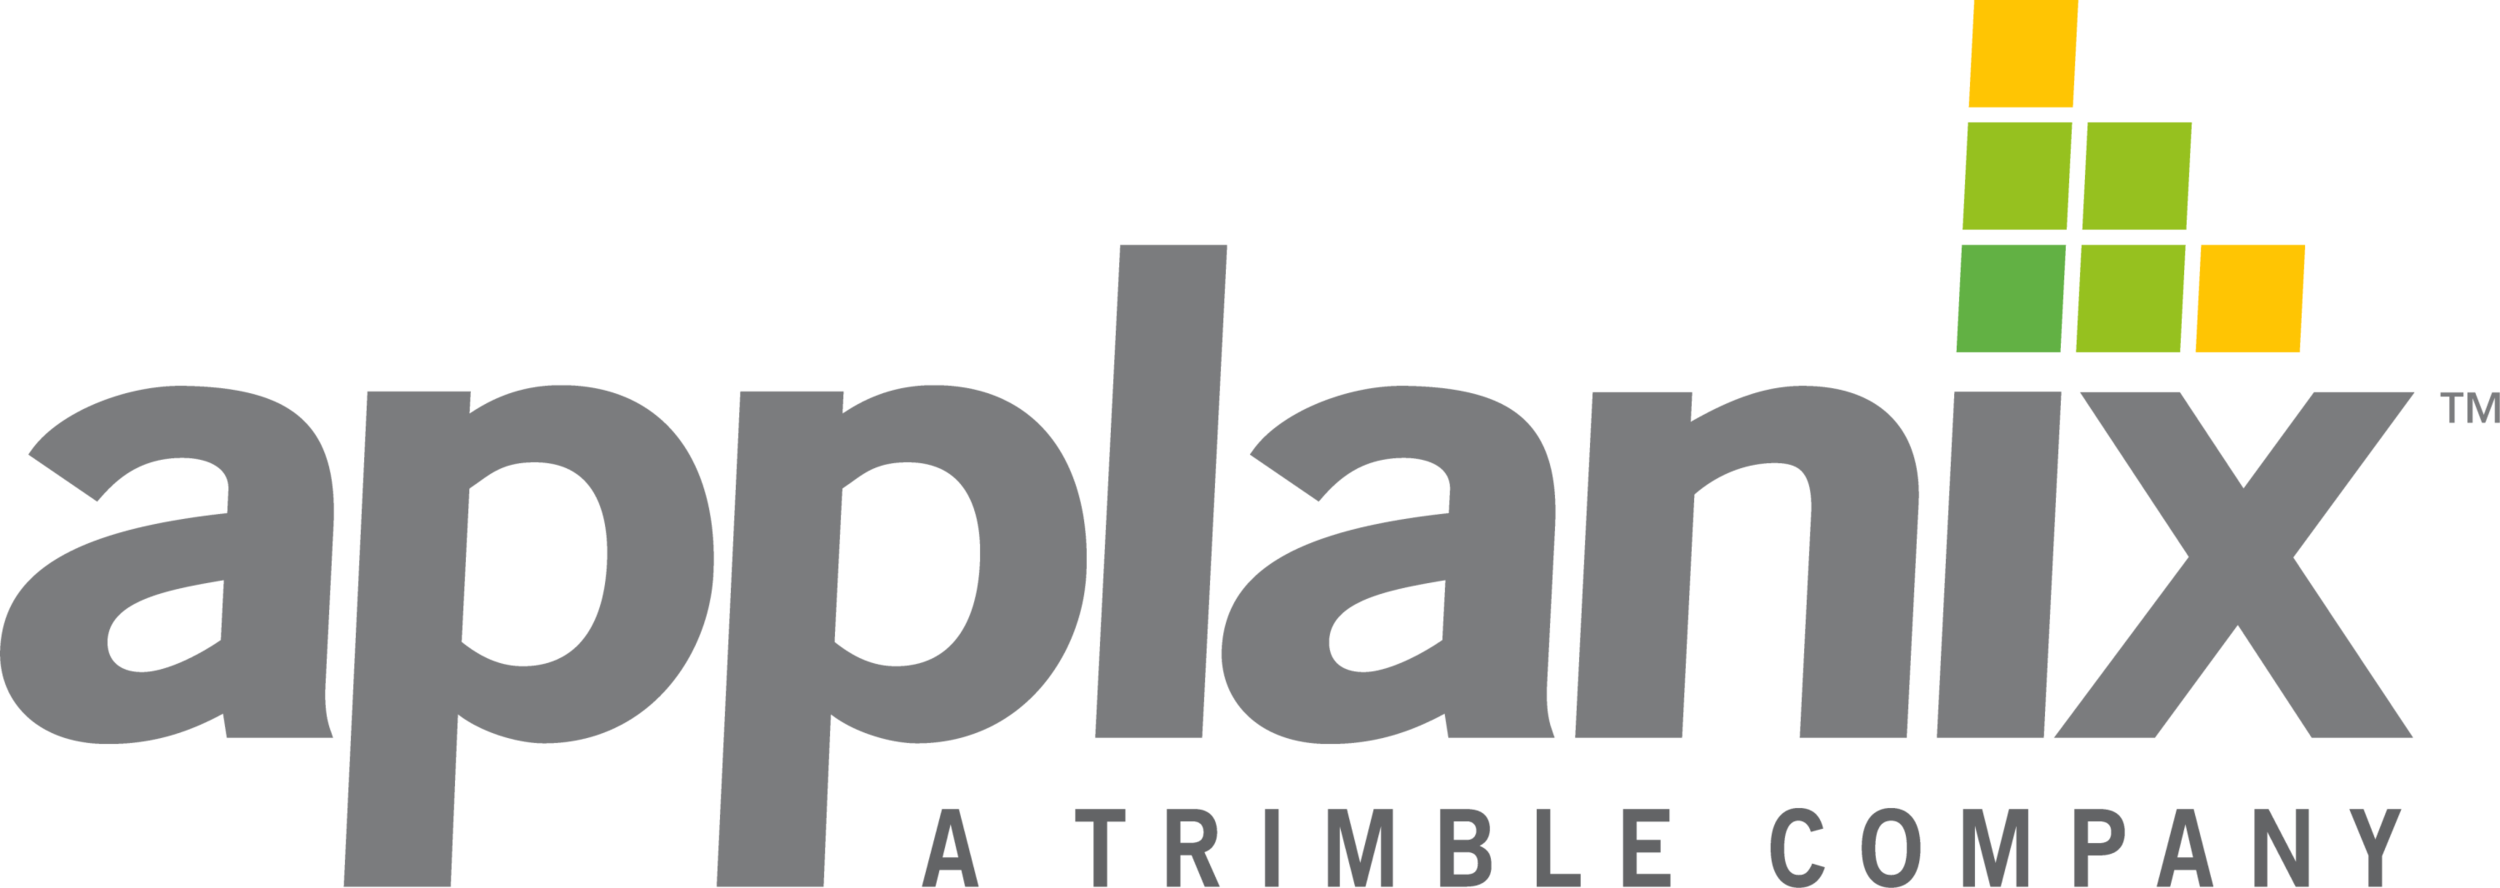 Applanix Logo 2020.png